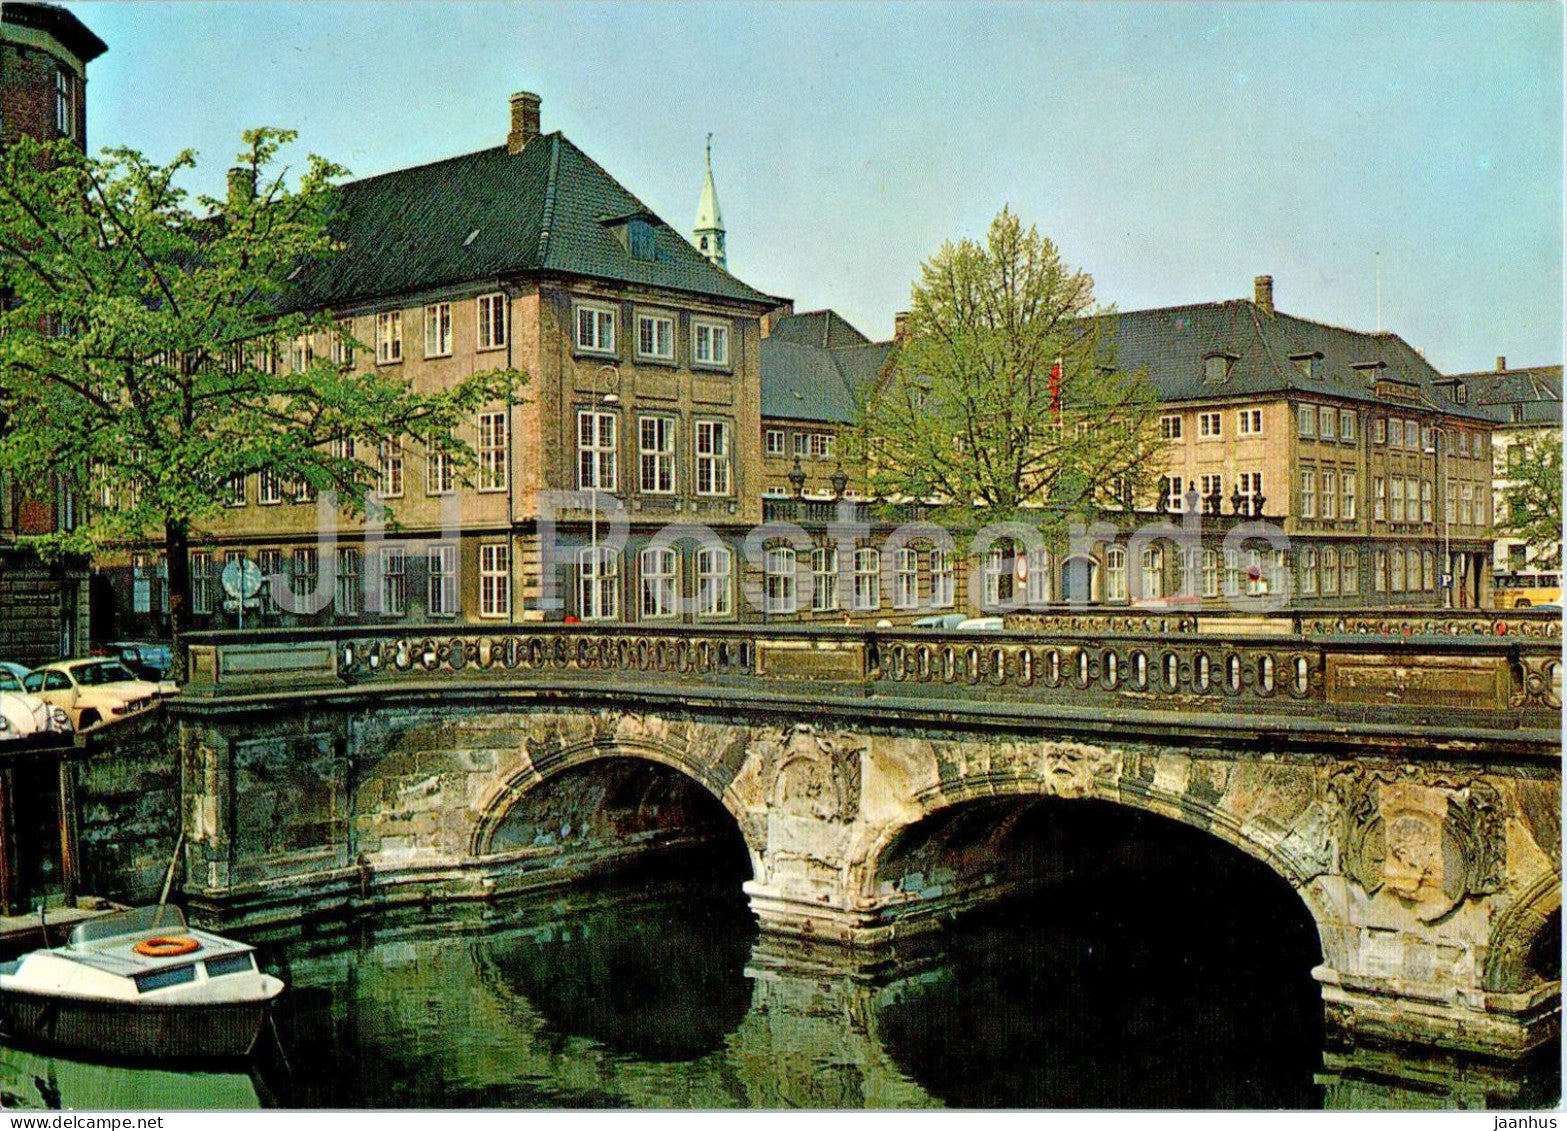 Copenhagen - Kobenhavn - The National Museum - The Prince's Palace and the Marble bridge boat - 9971 - Denmark - unused - JH Postcards